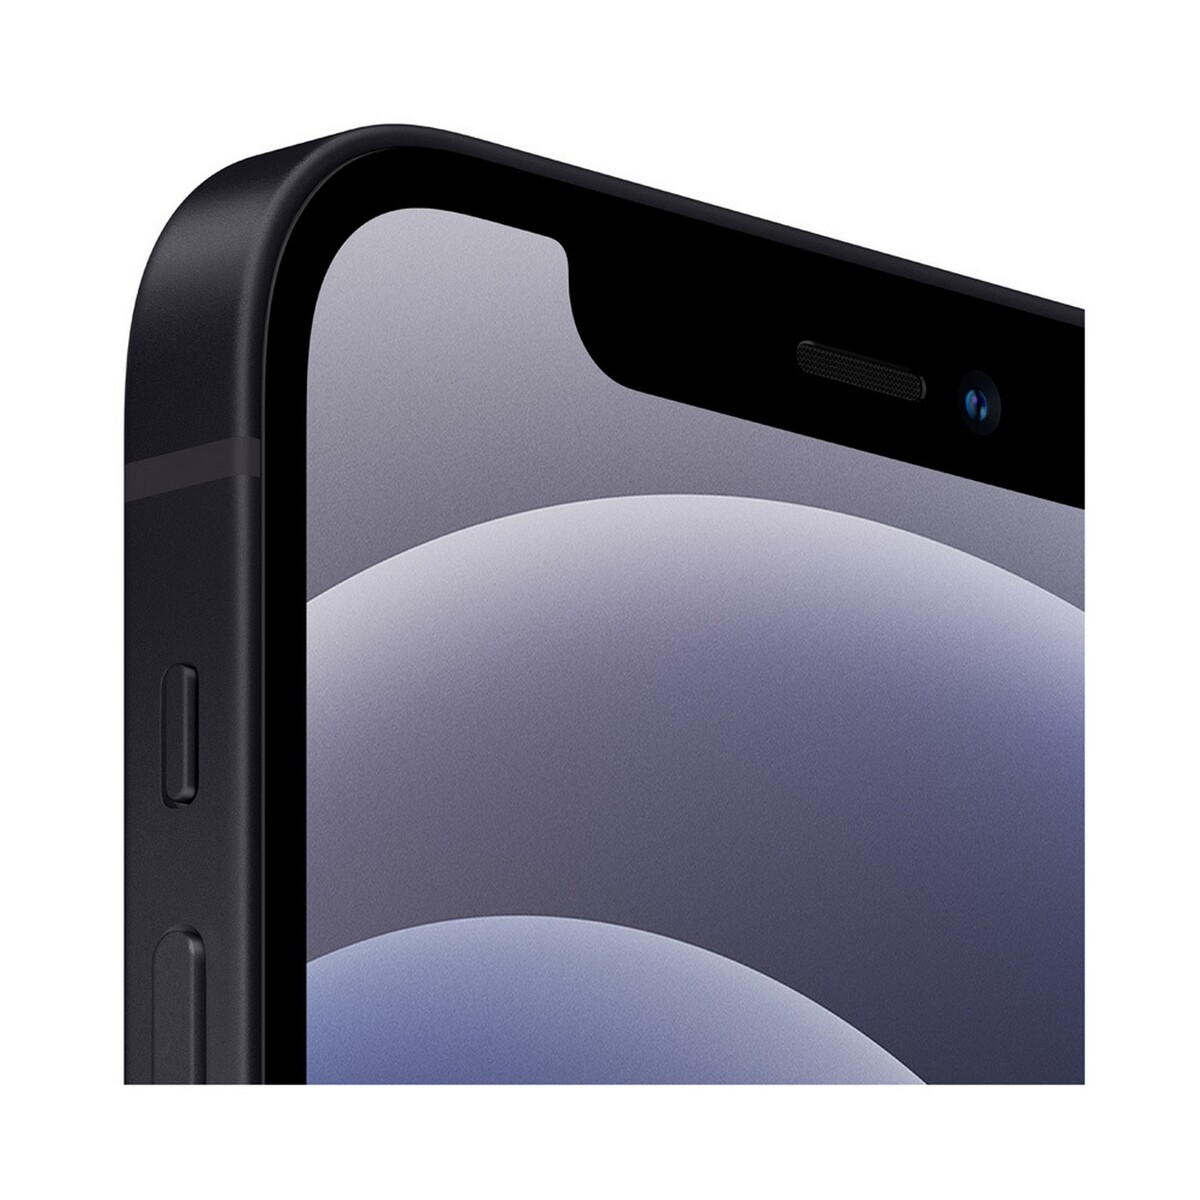 Apple iPhone 12 128GB Black